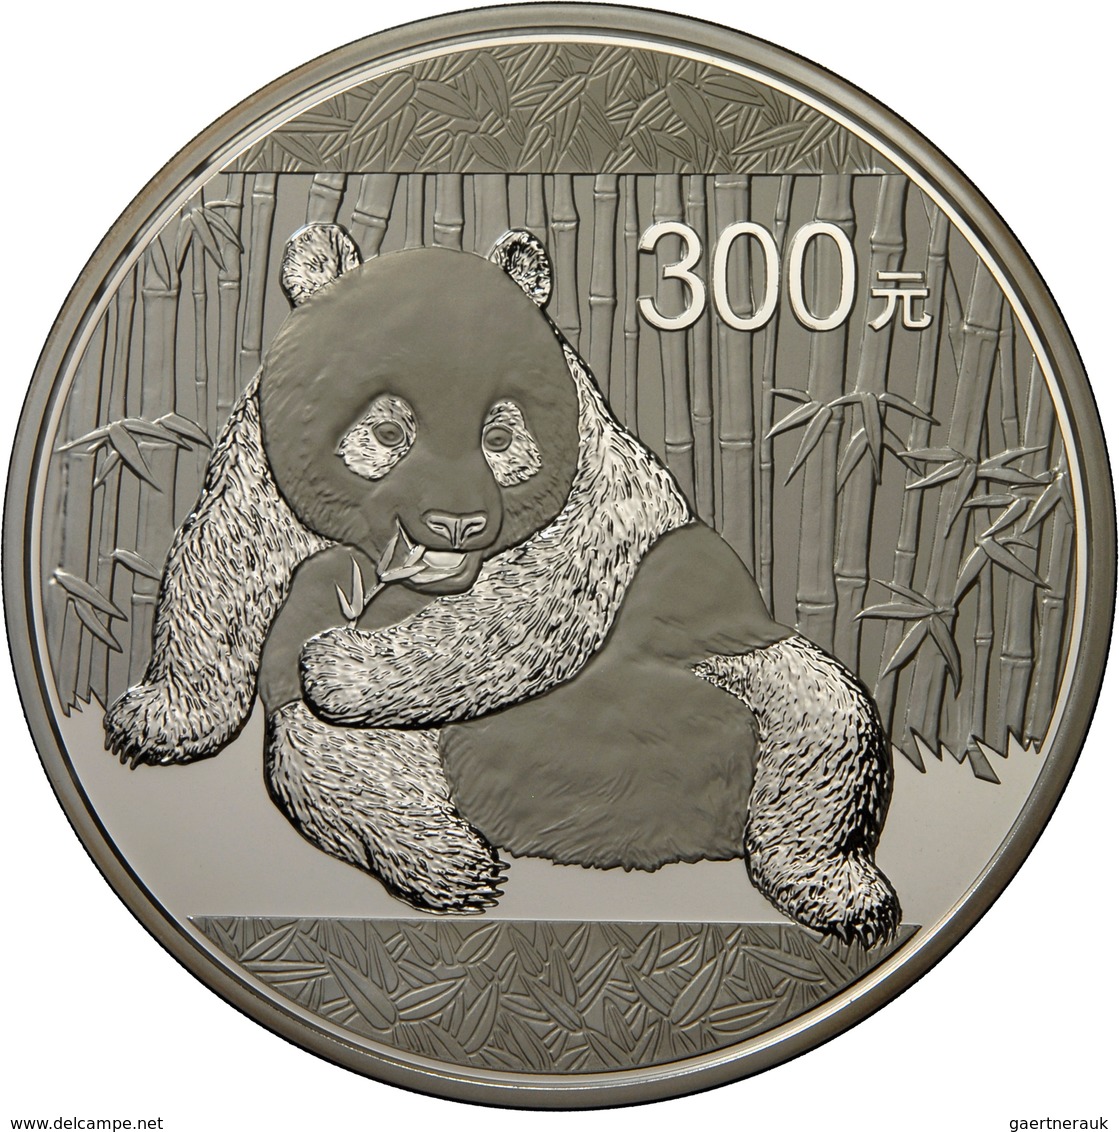 China - Volksrepublik: 300 Yuan 2015, Silber Panda, 1 Kg 999/1000 Silber. Inklusive Zertifikat, Etui - Cina